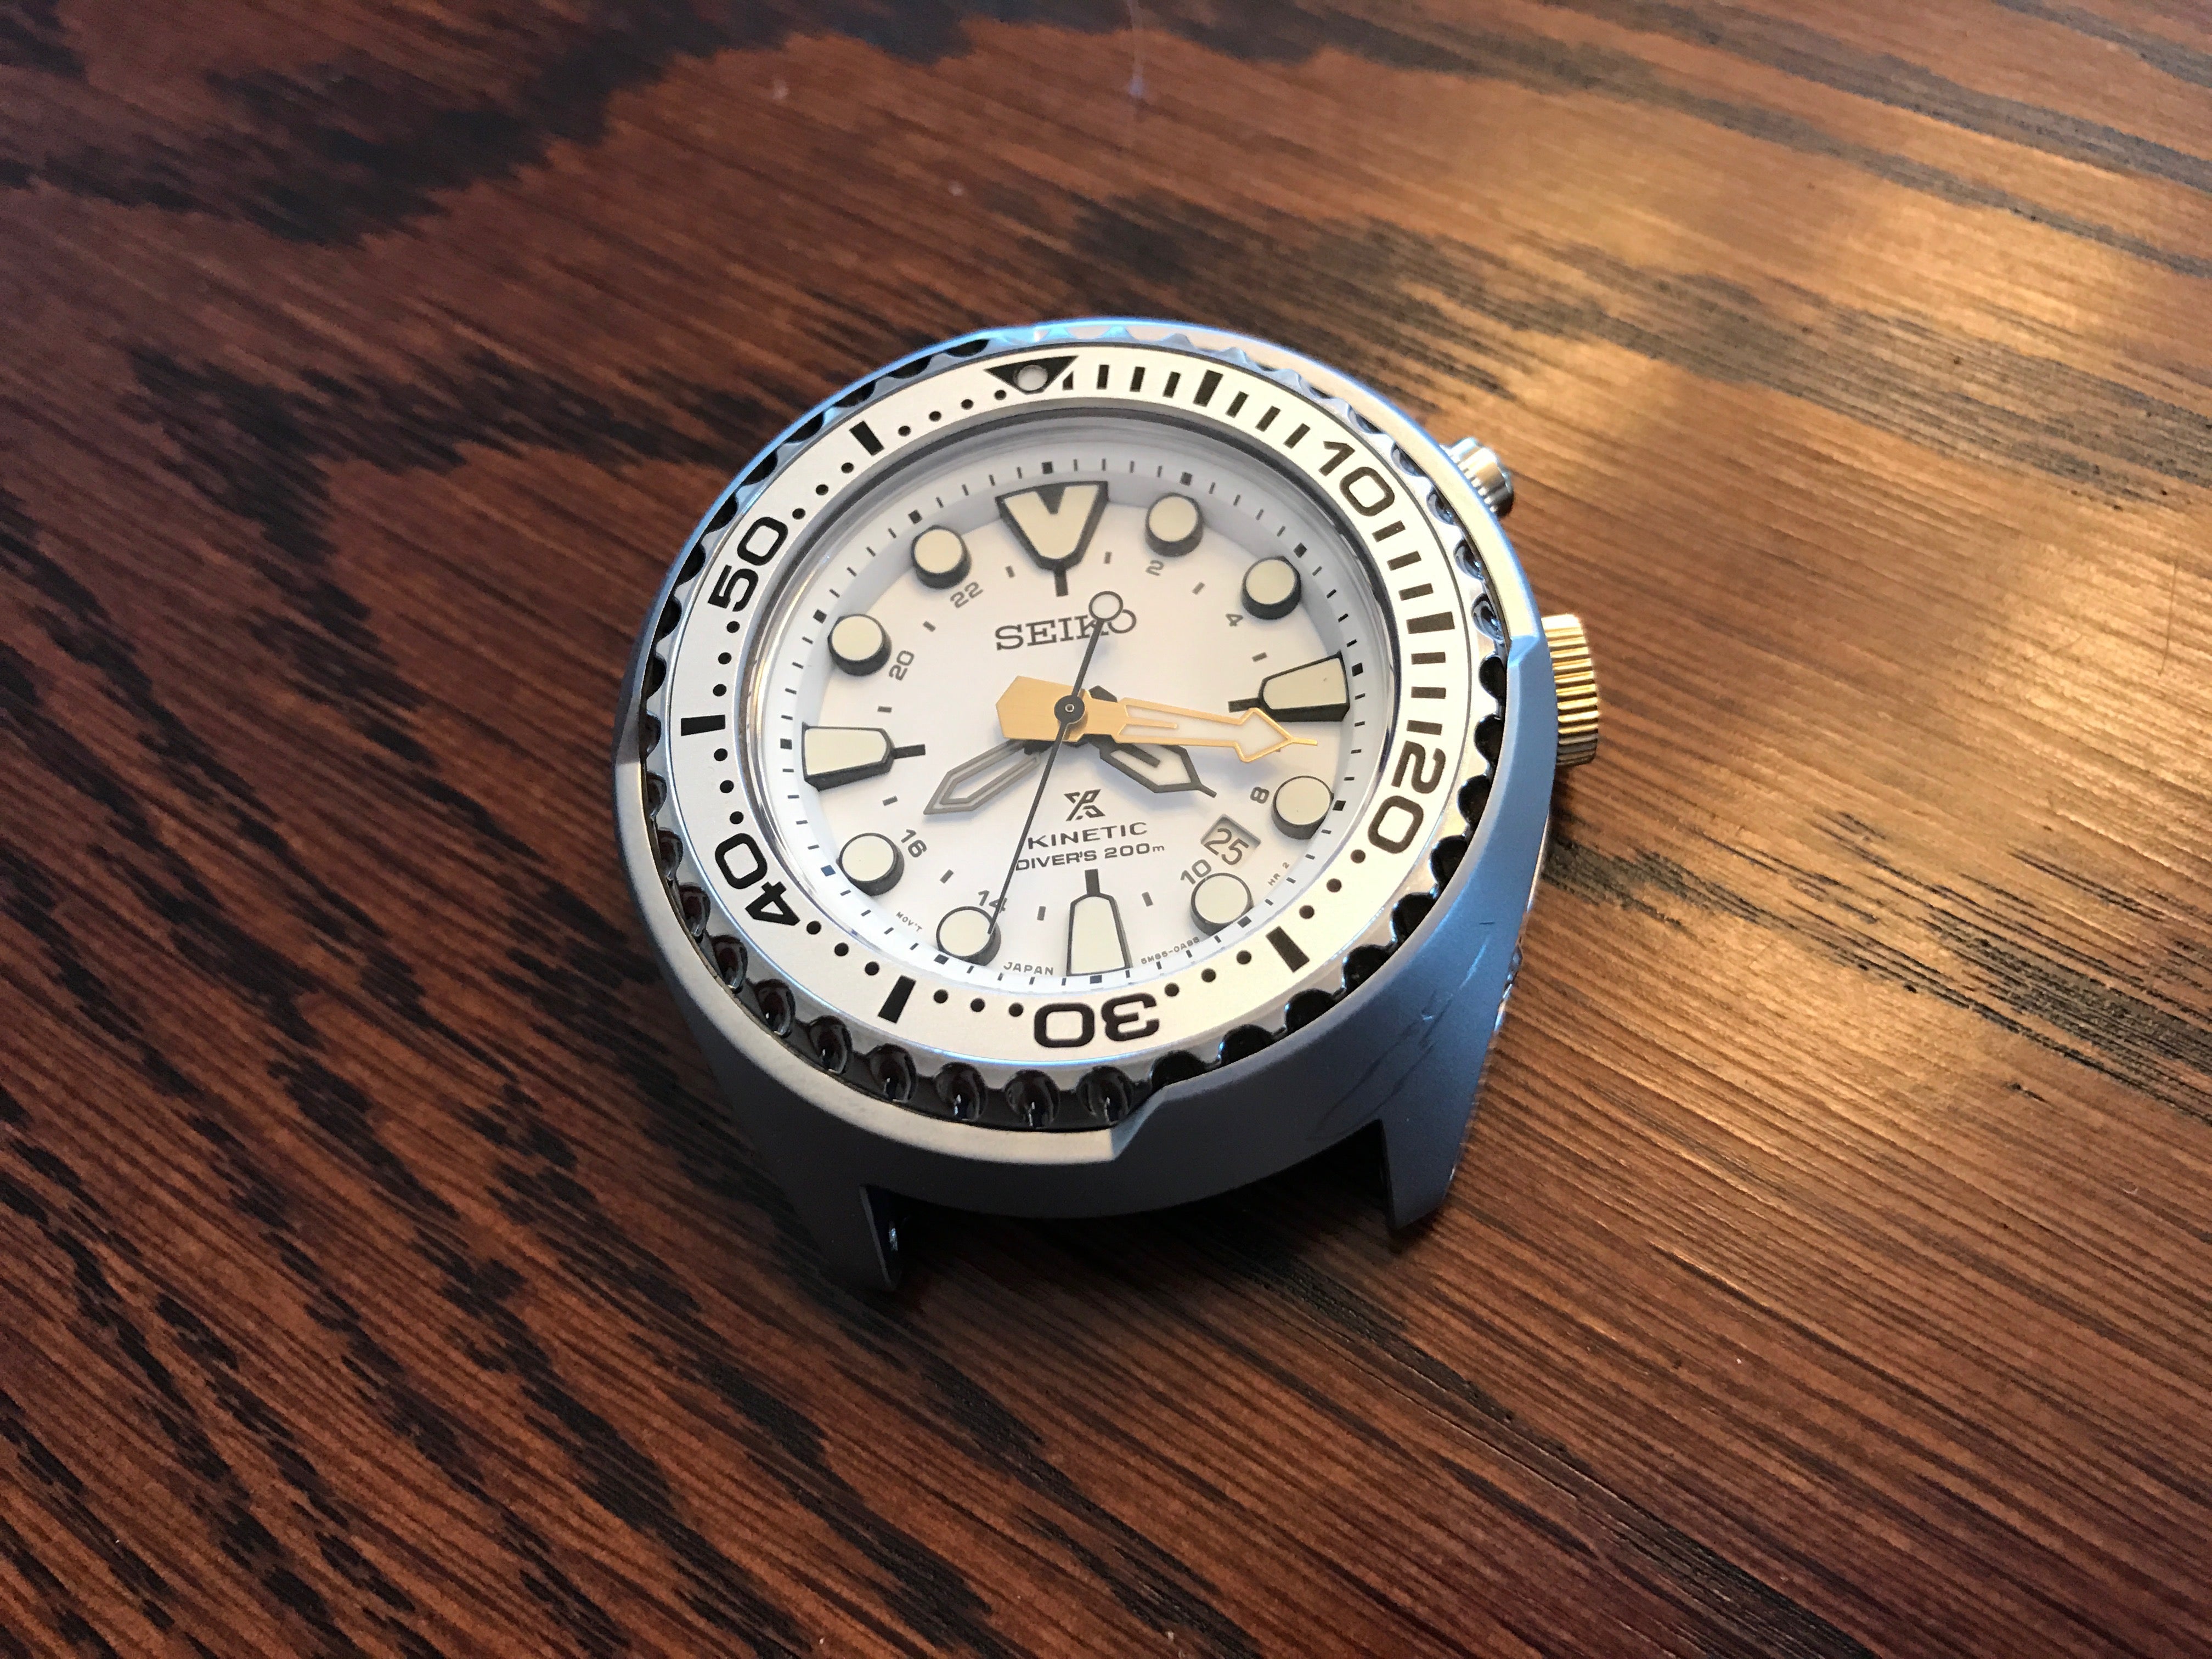 5m85 kinetic seiko watch battery replacement? | WatchUSeek Watch Forums